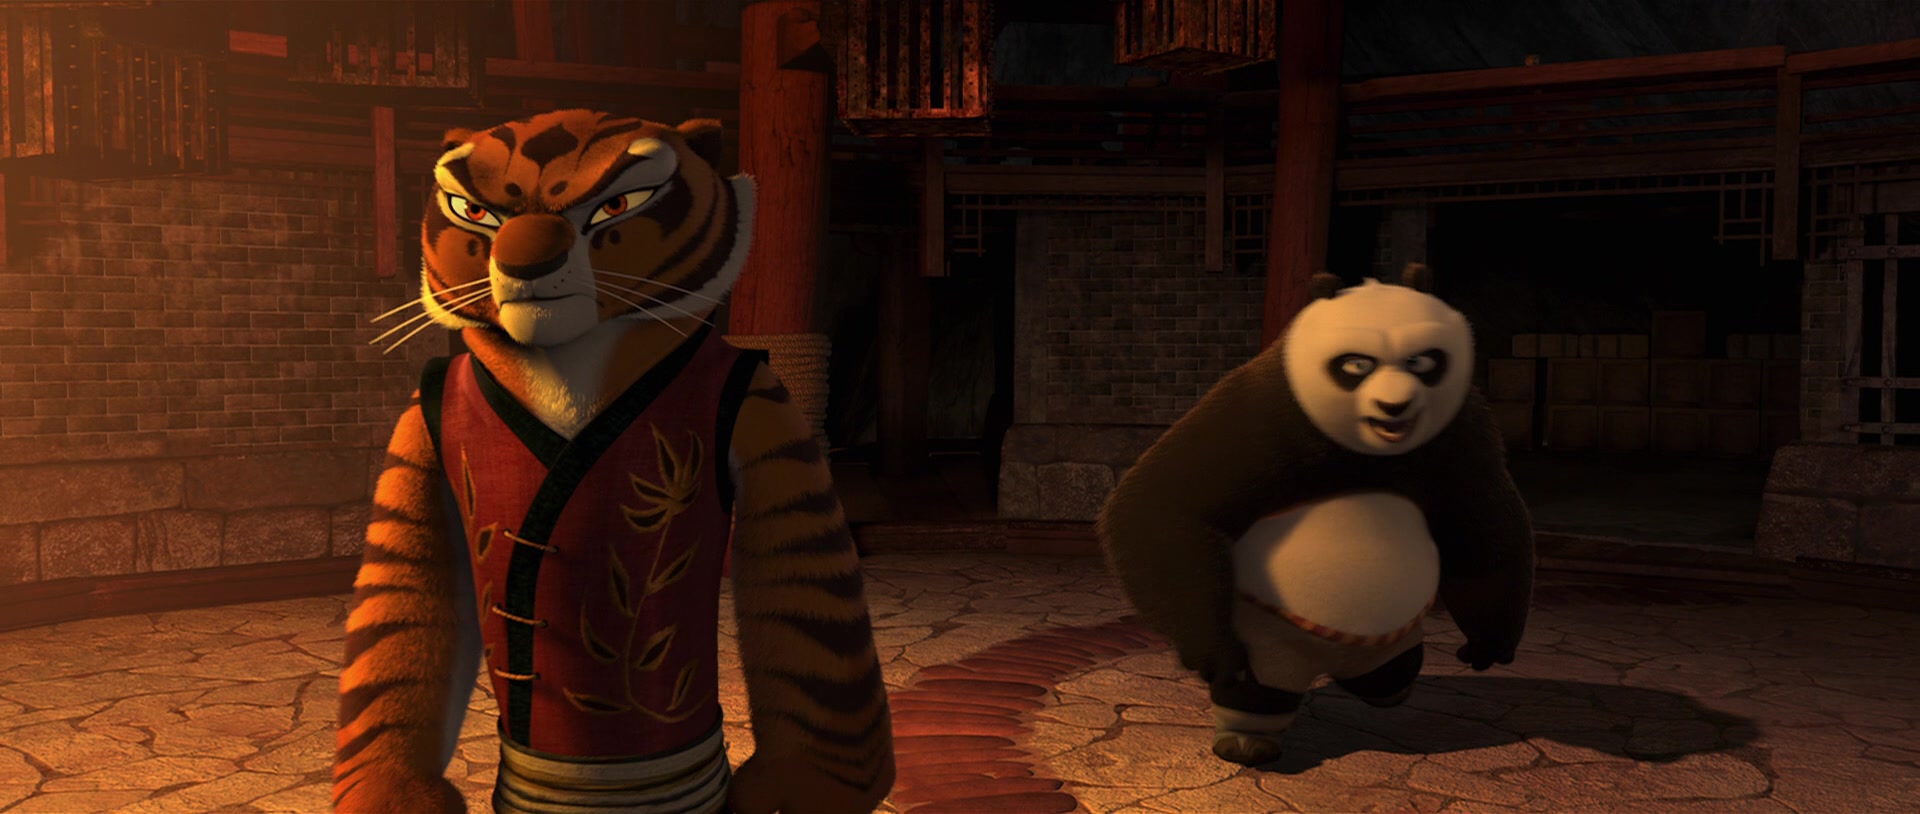 Kung Fu Panda 2d. Kung Fu Panda 2 (Video game). Кто озвучивал кунг фу панда 1